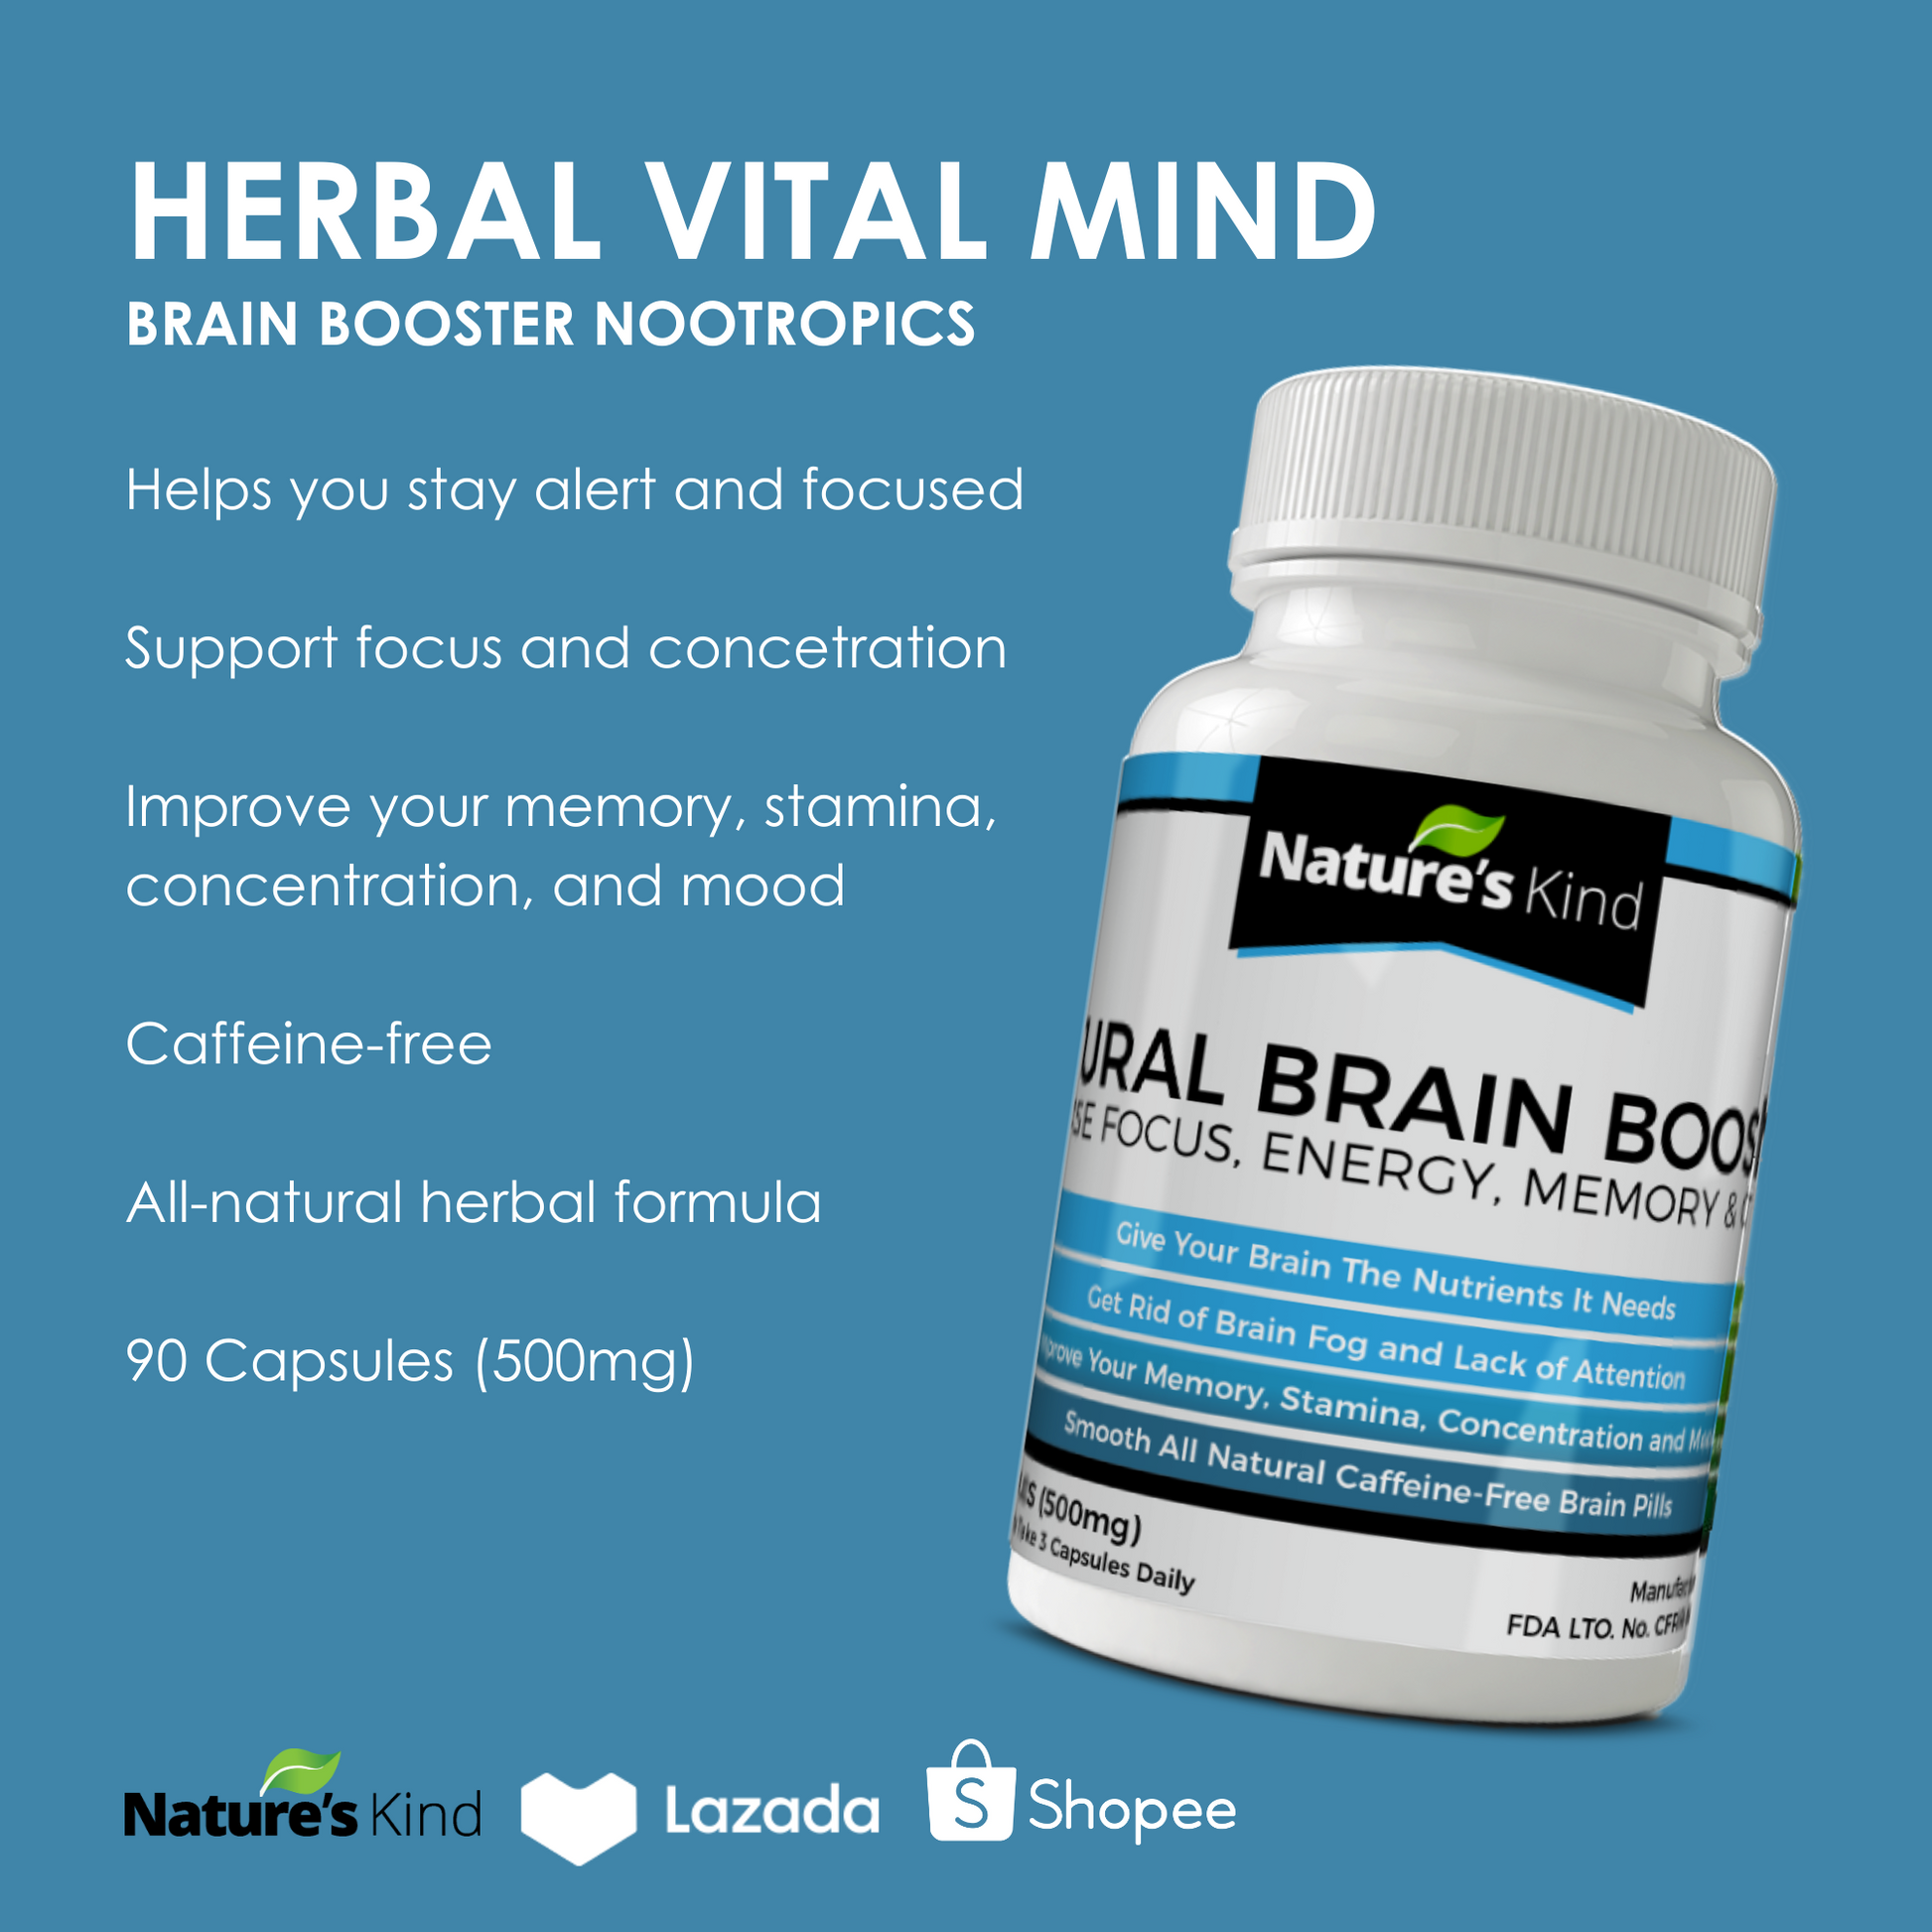 VitalMind Brain Booster Nootropics - Increase Focus, Energy